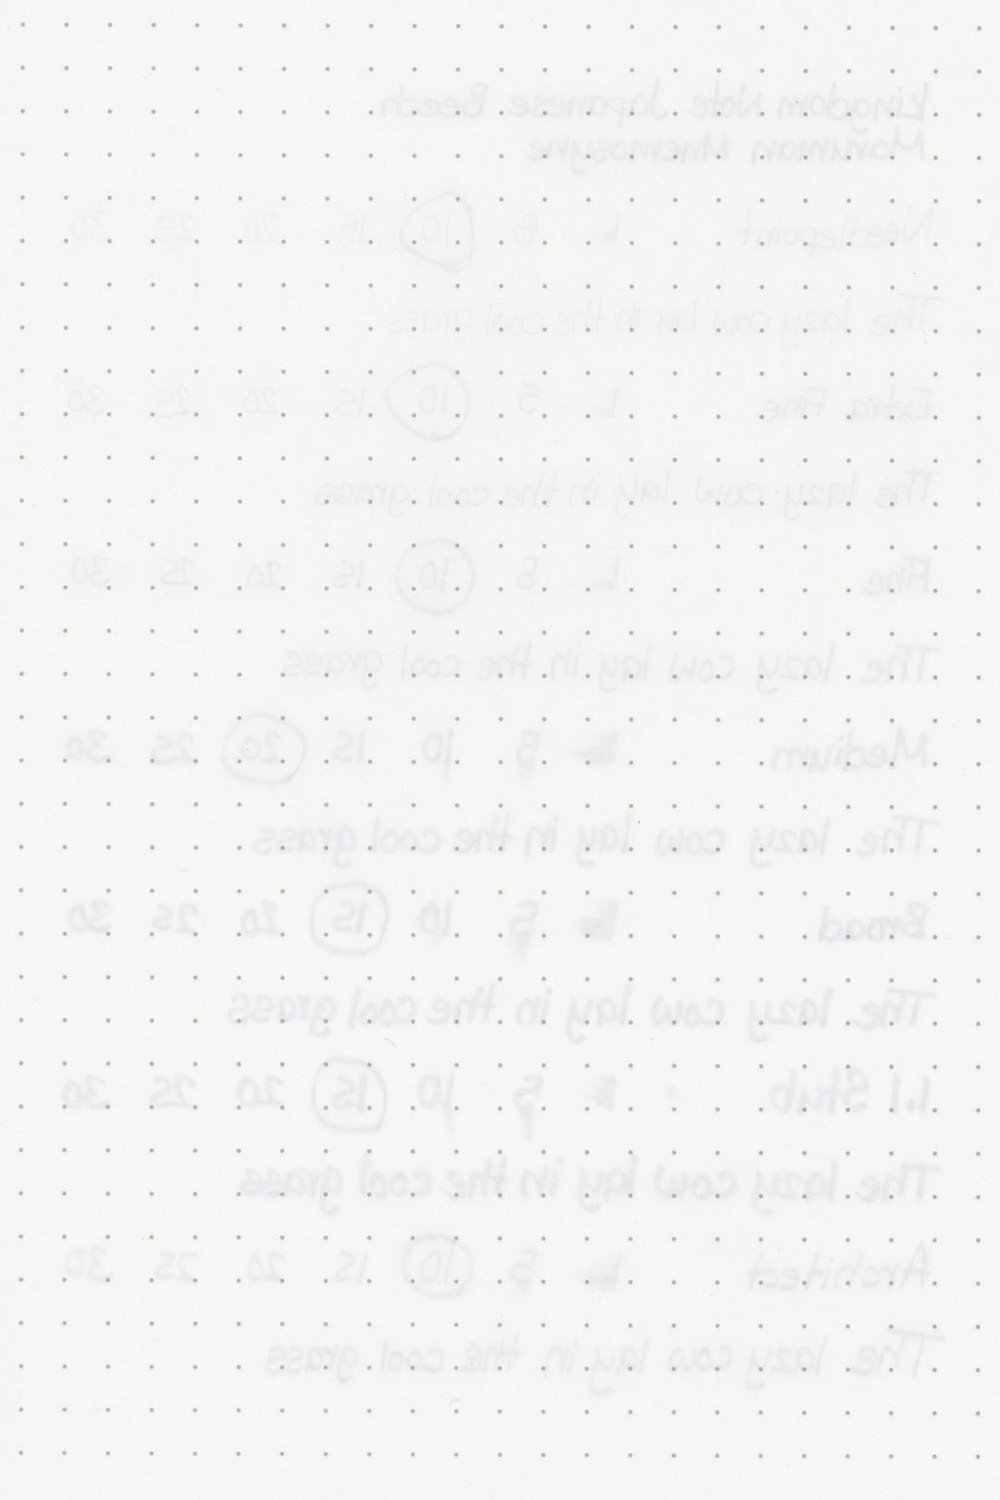 Kingdom-Note-Japanese-Beech-Ink-Test-Maruman-Rear.jpg